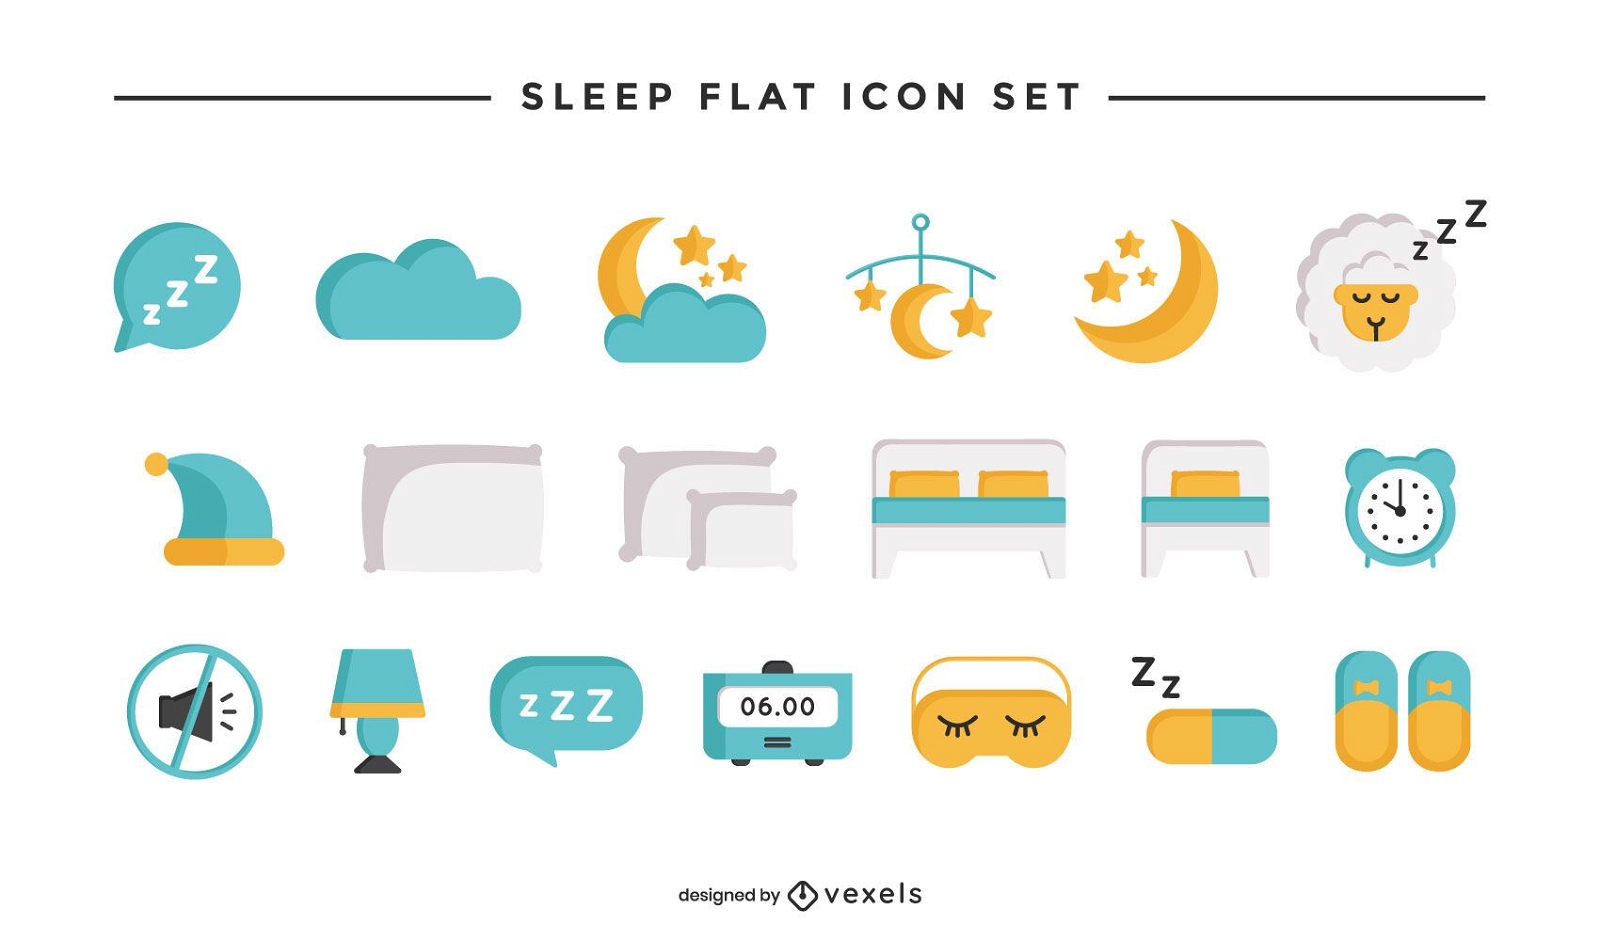 Sleep flat icon set